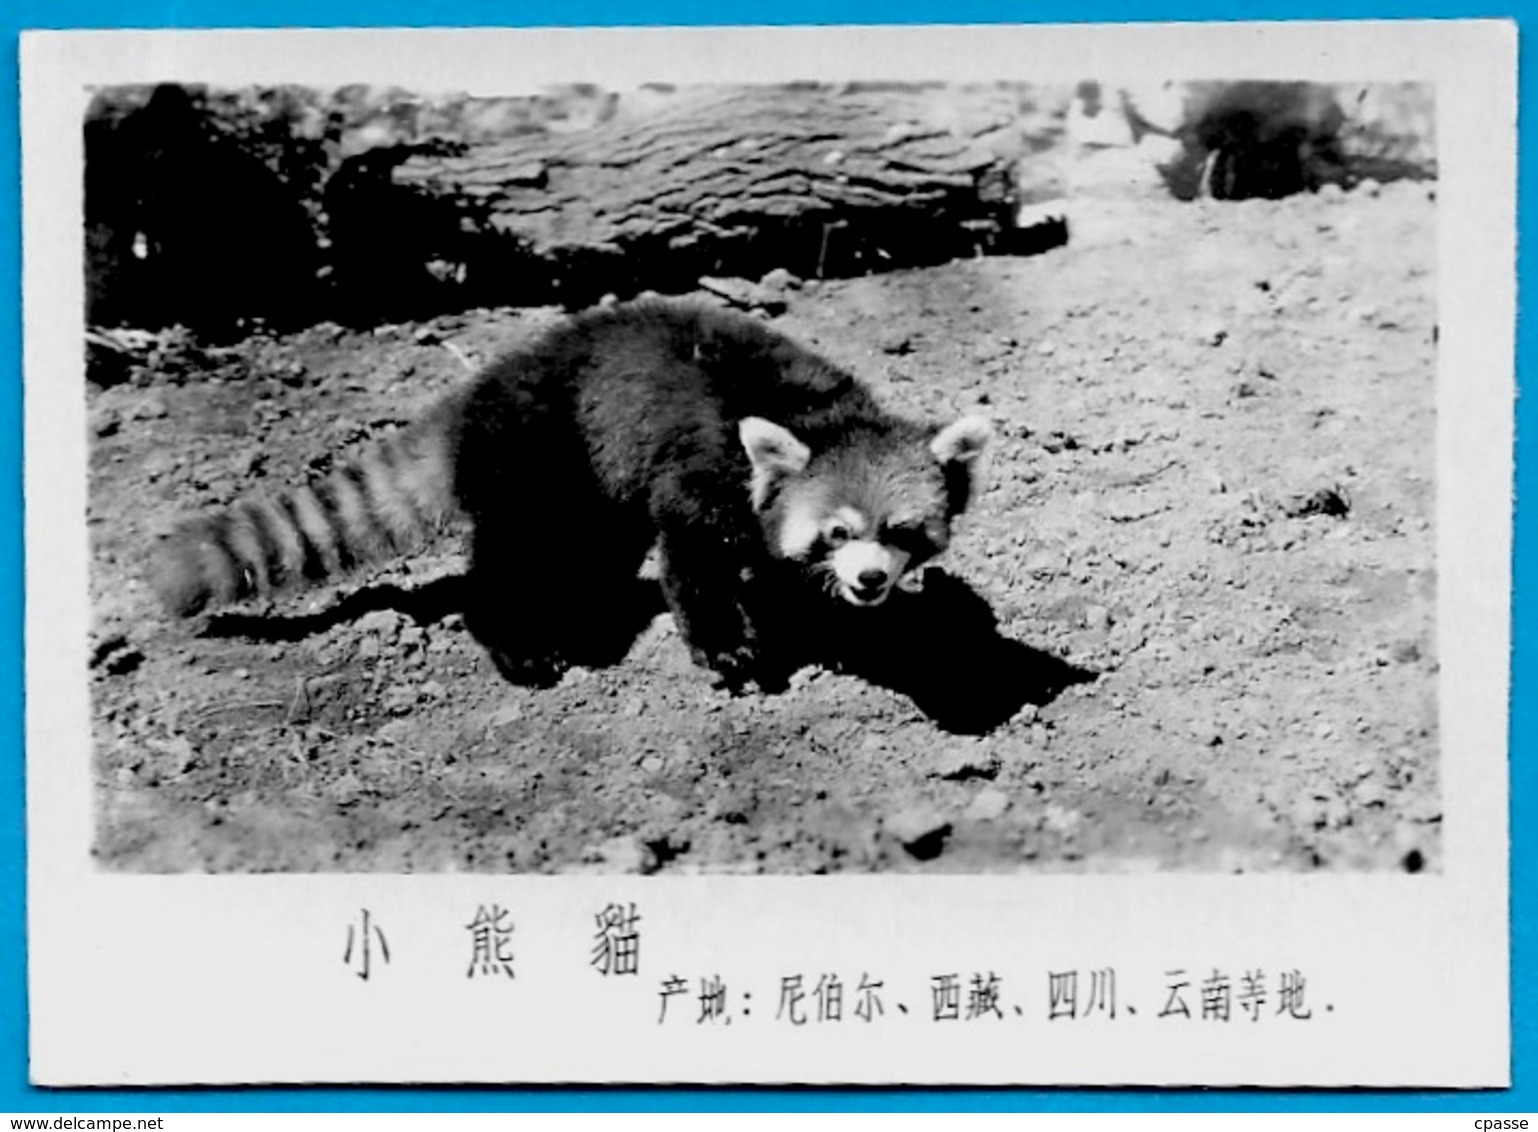 Lot de trente PHOTOS d'Animaux dont Panda - ZOO (a priori de BEIJING Pékin Chine China)